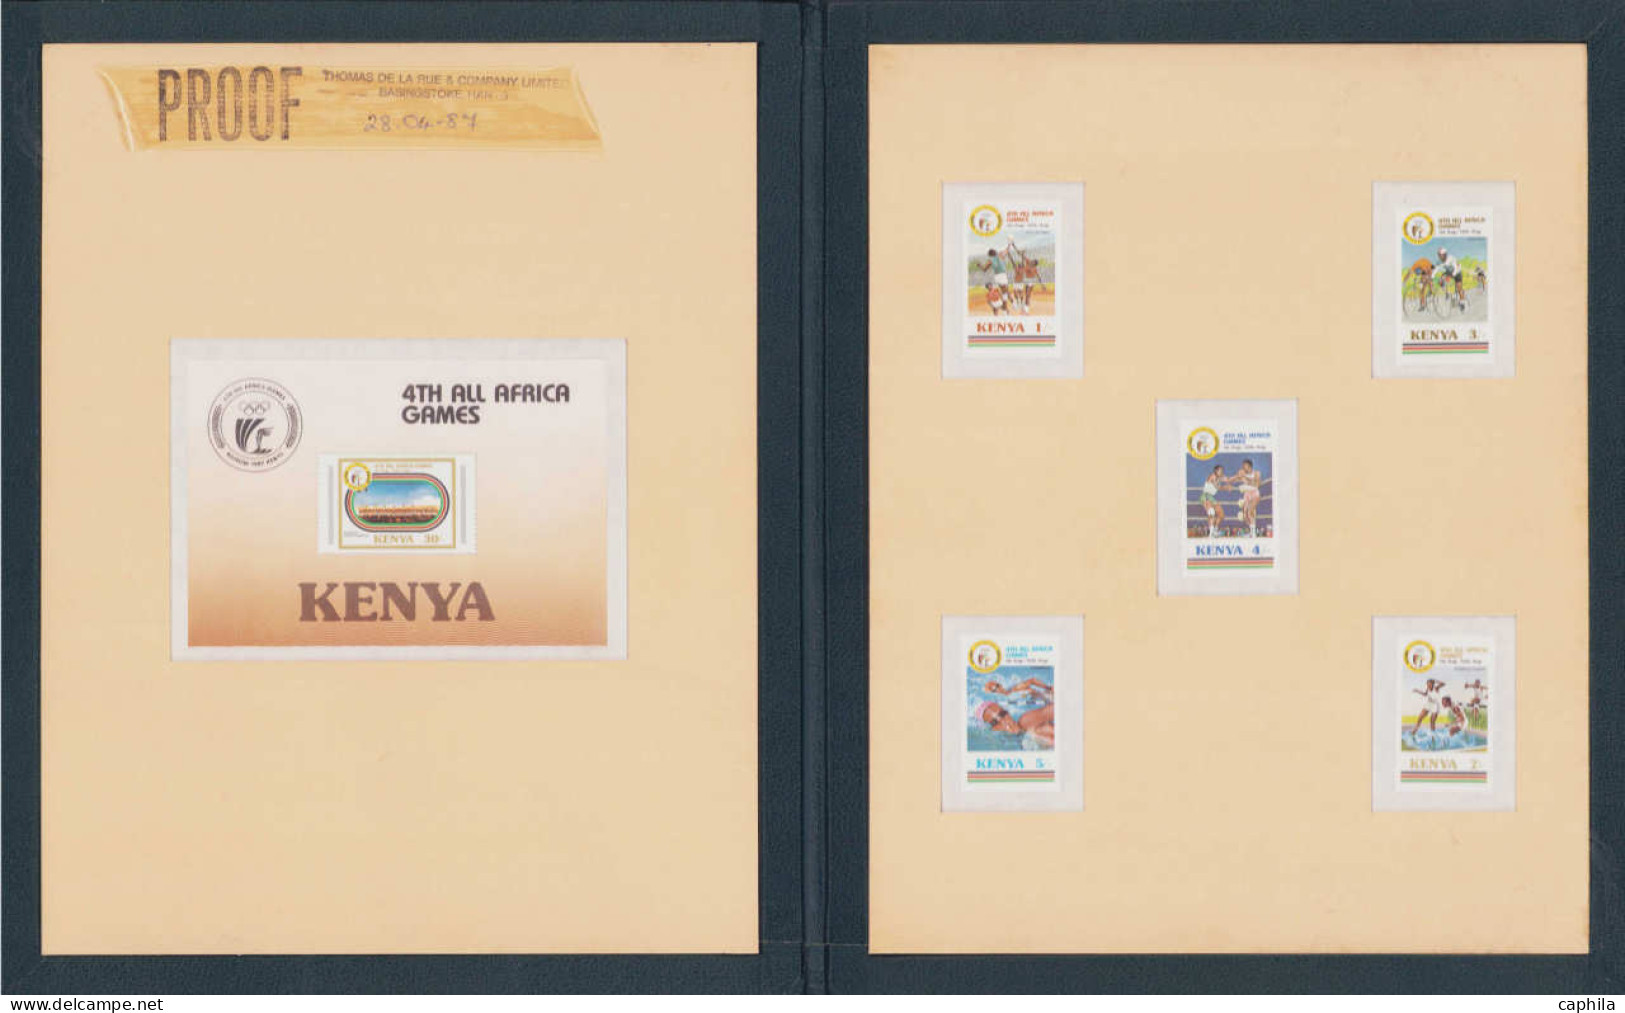 EPA KENYA - Poste - 401/05 + Bf 31, Collés Sur Livret En Cuir "Delarue" Annoté "Proof 28/4/87": Sports, Boxe, Cyclisme,  - Kenya (1963-...)